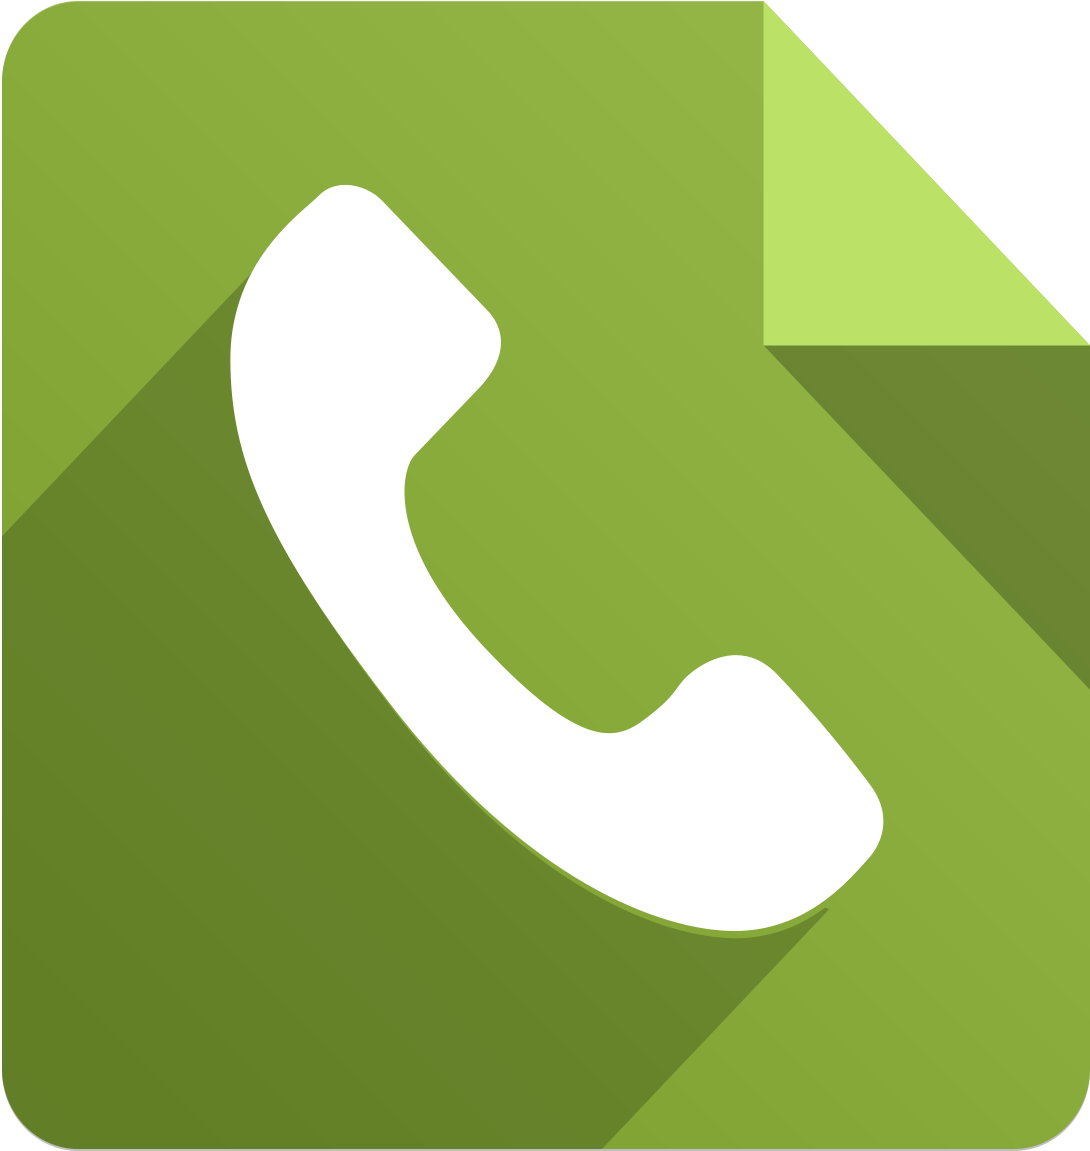 Telephone Icon - Cell Phone - Icono De Telefono Celular (1772x1772)